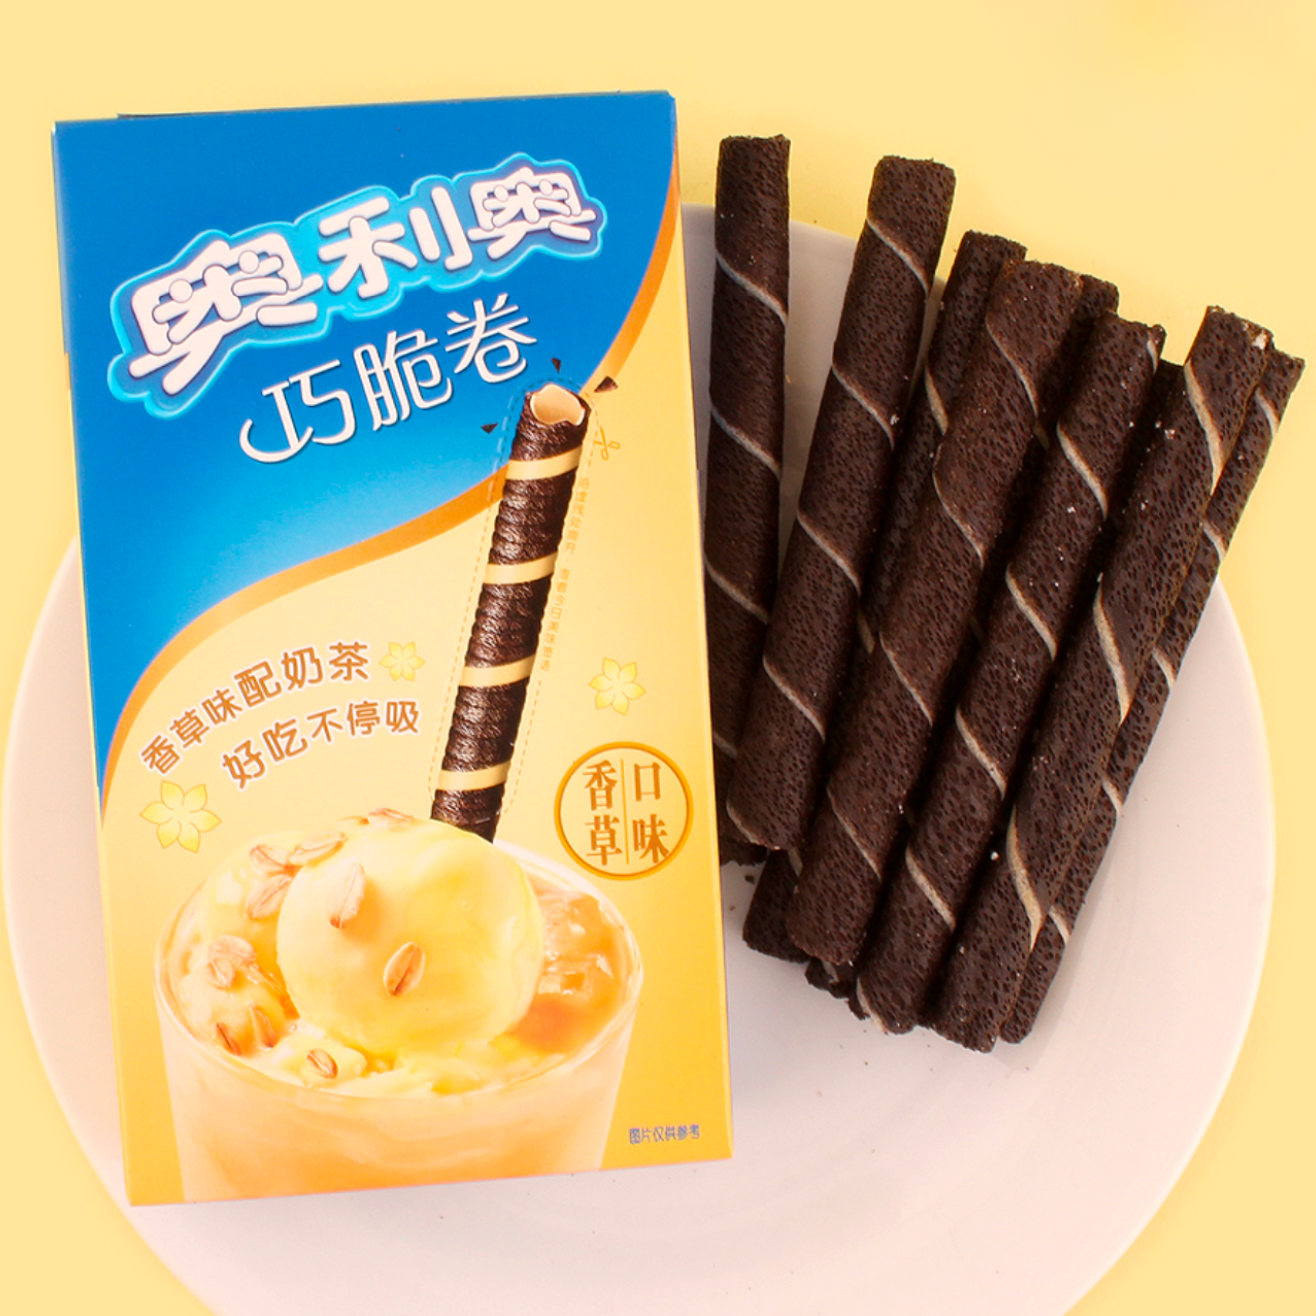 Asian Oreo Wafer Rolls – 4 Pack Variety Sampler | Limited Edition: Vanilla Mousse, Strawberry Milkshake, Japanese Matcha, Rich Chocolate